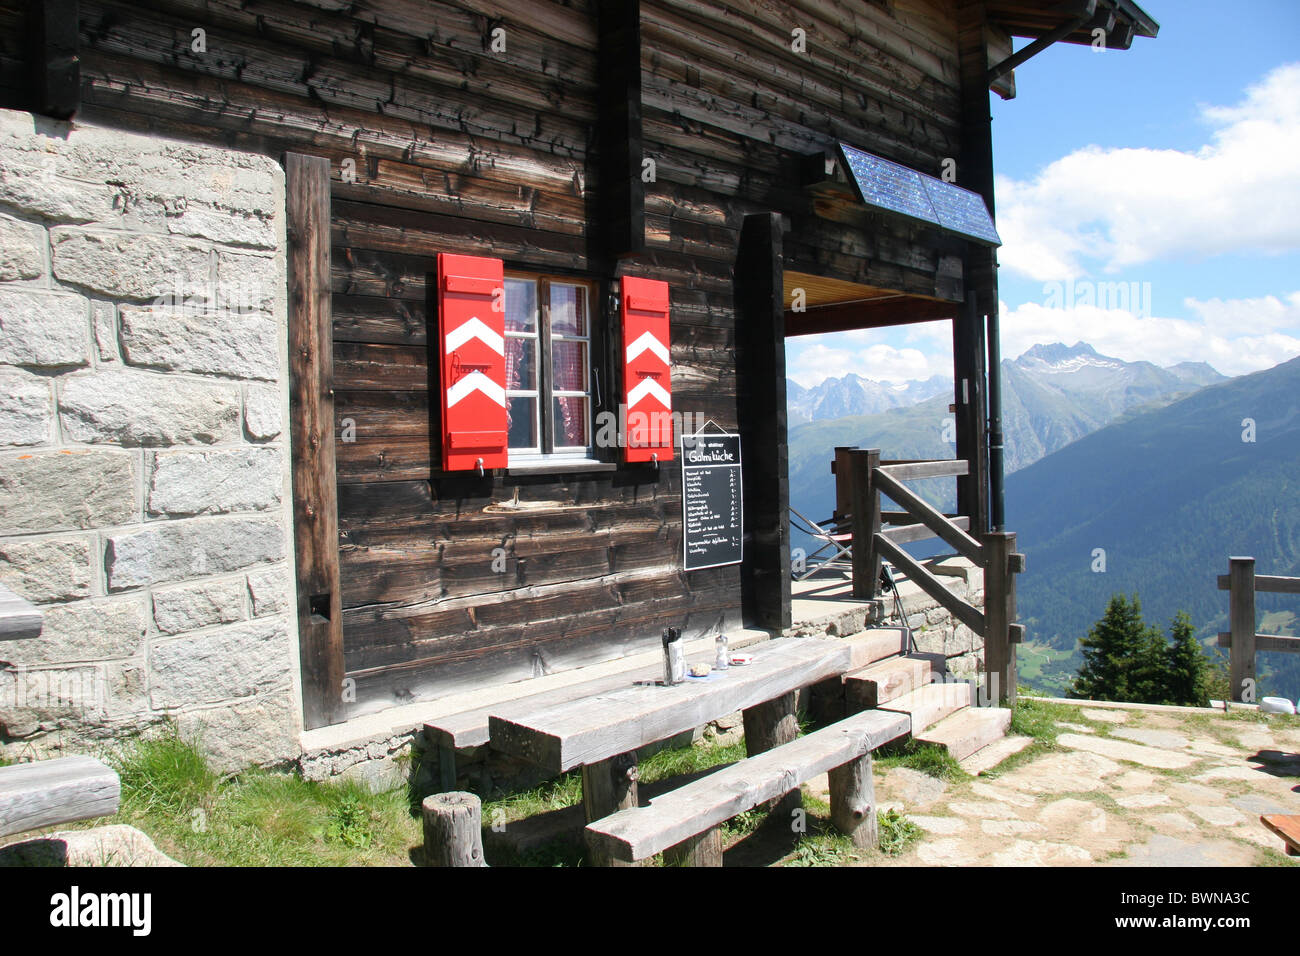 Switzerland Europe Canton Valais Goms Galmihornhutte Galmihorn hut SAC hut cabin alpine alps mountains hiki Stock Photo